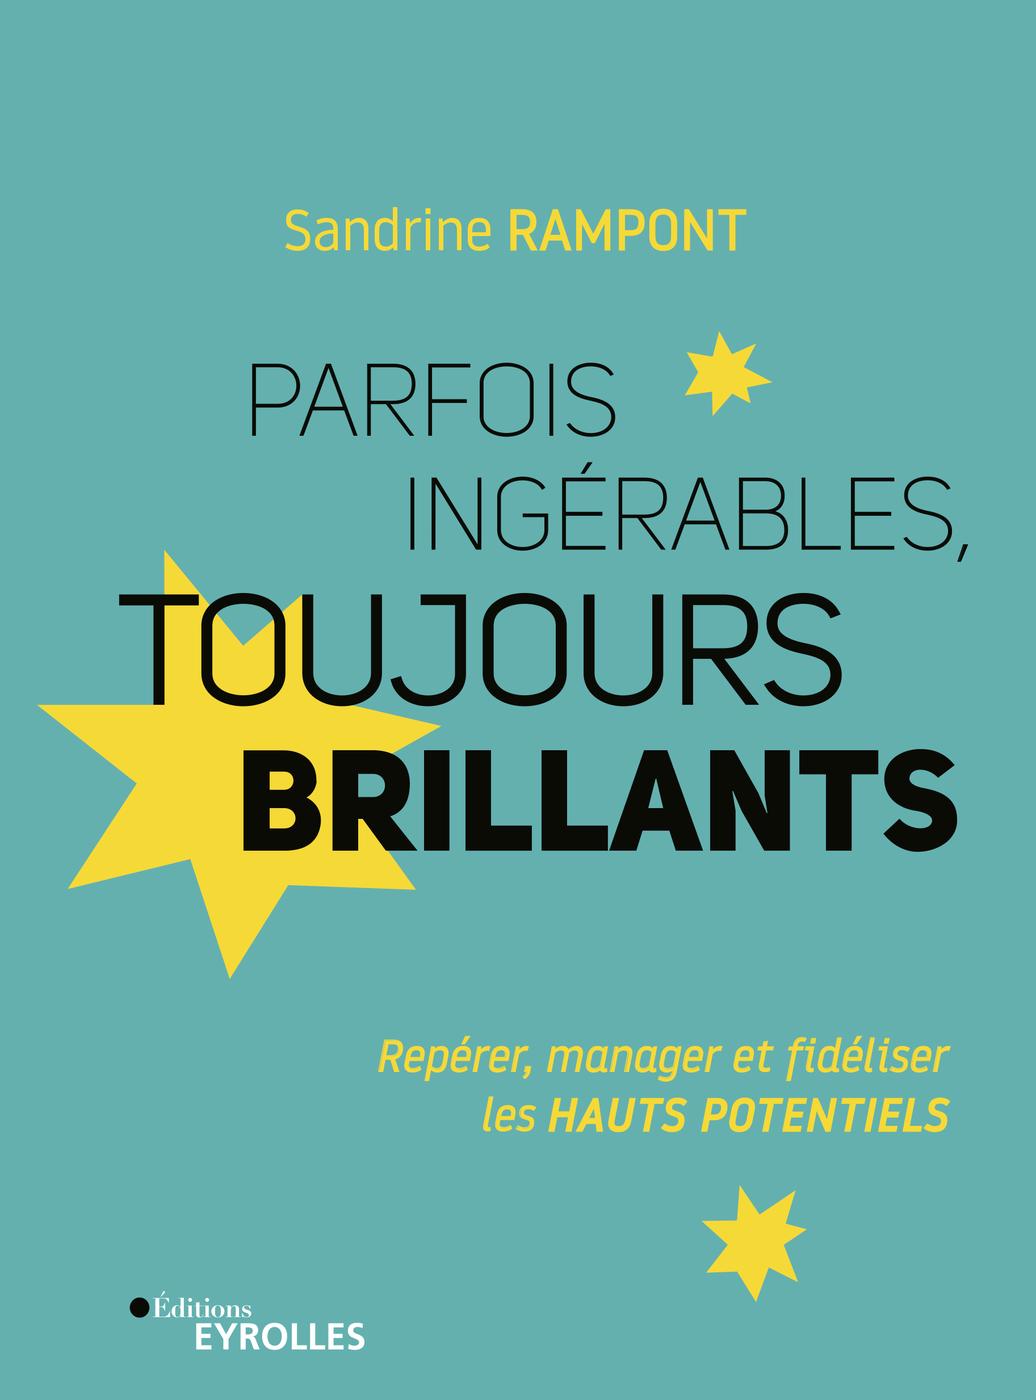 Rencontre - dédicace Sandrine Rampont